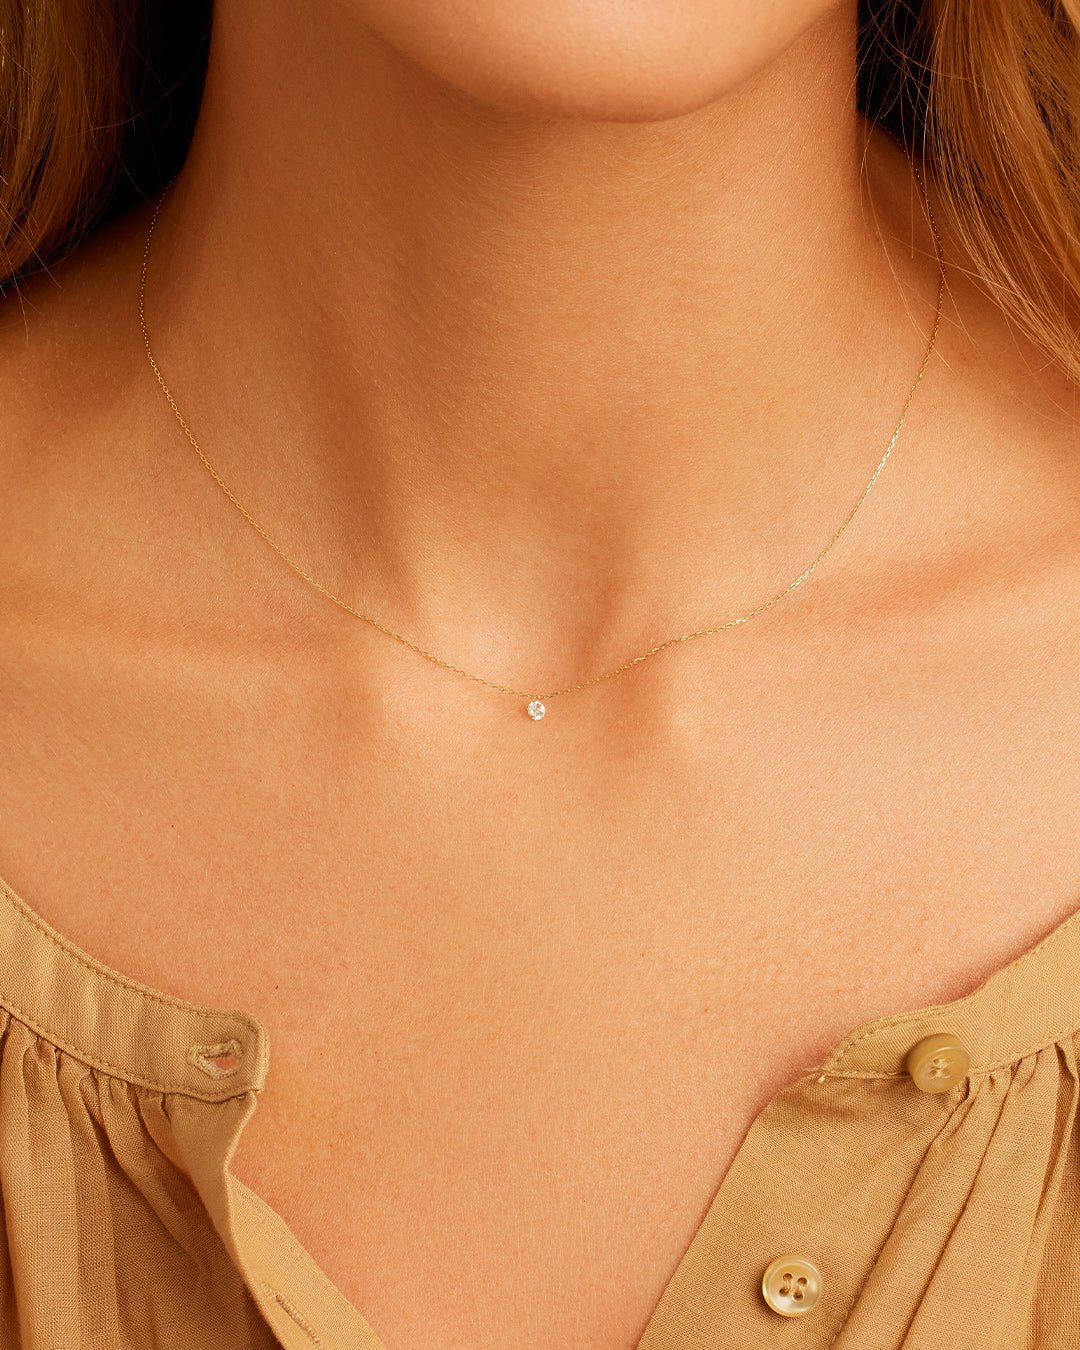 Floating Diamond Necklace in 18K Solid Gold, Women's by Gorjana